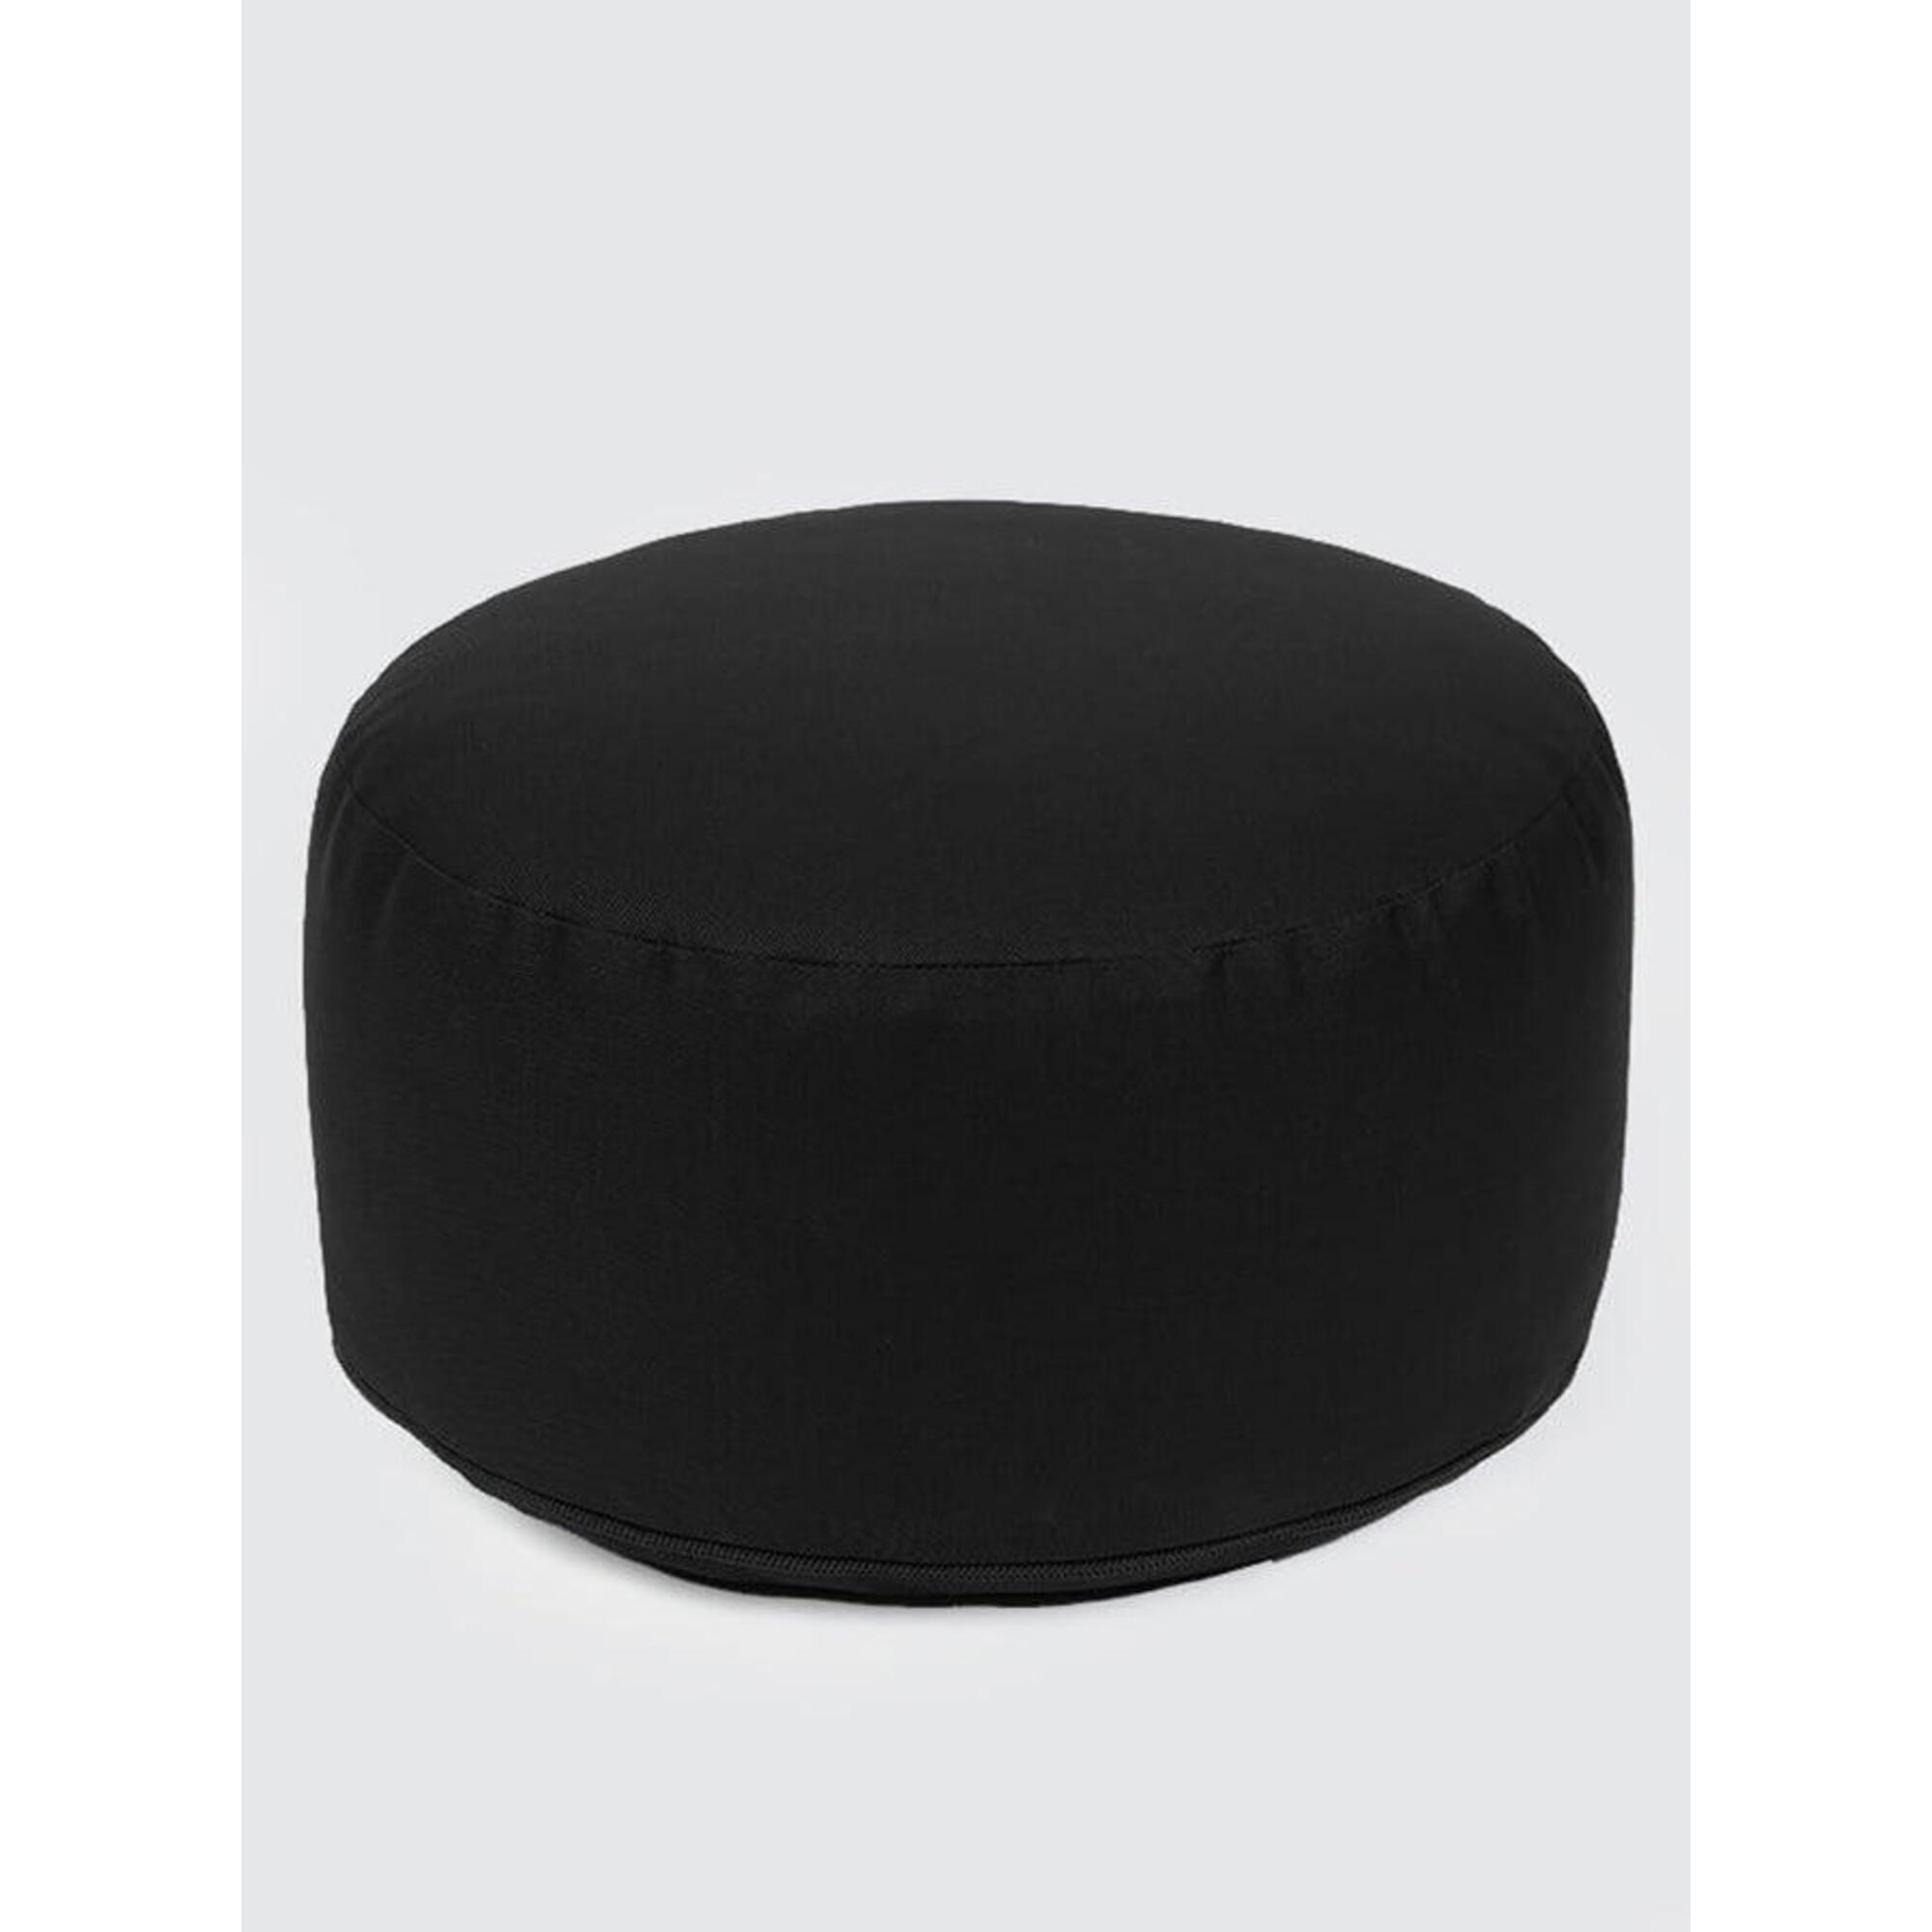 Yoga Studio Cylinder Meditation Cushion - Black 2/3